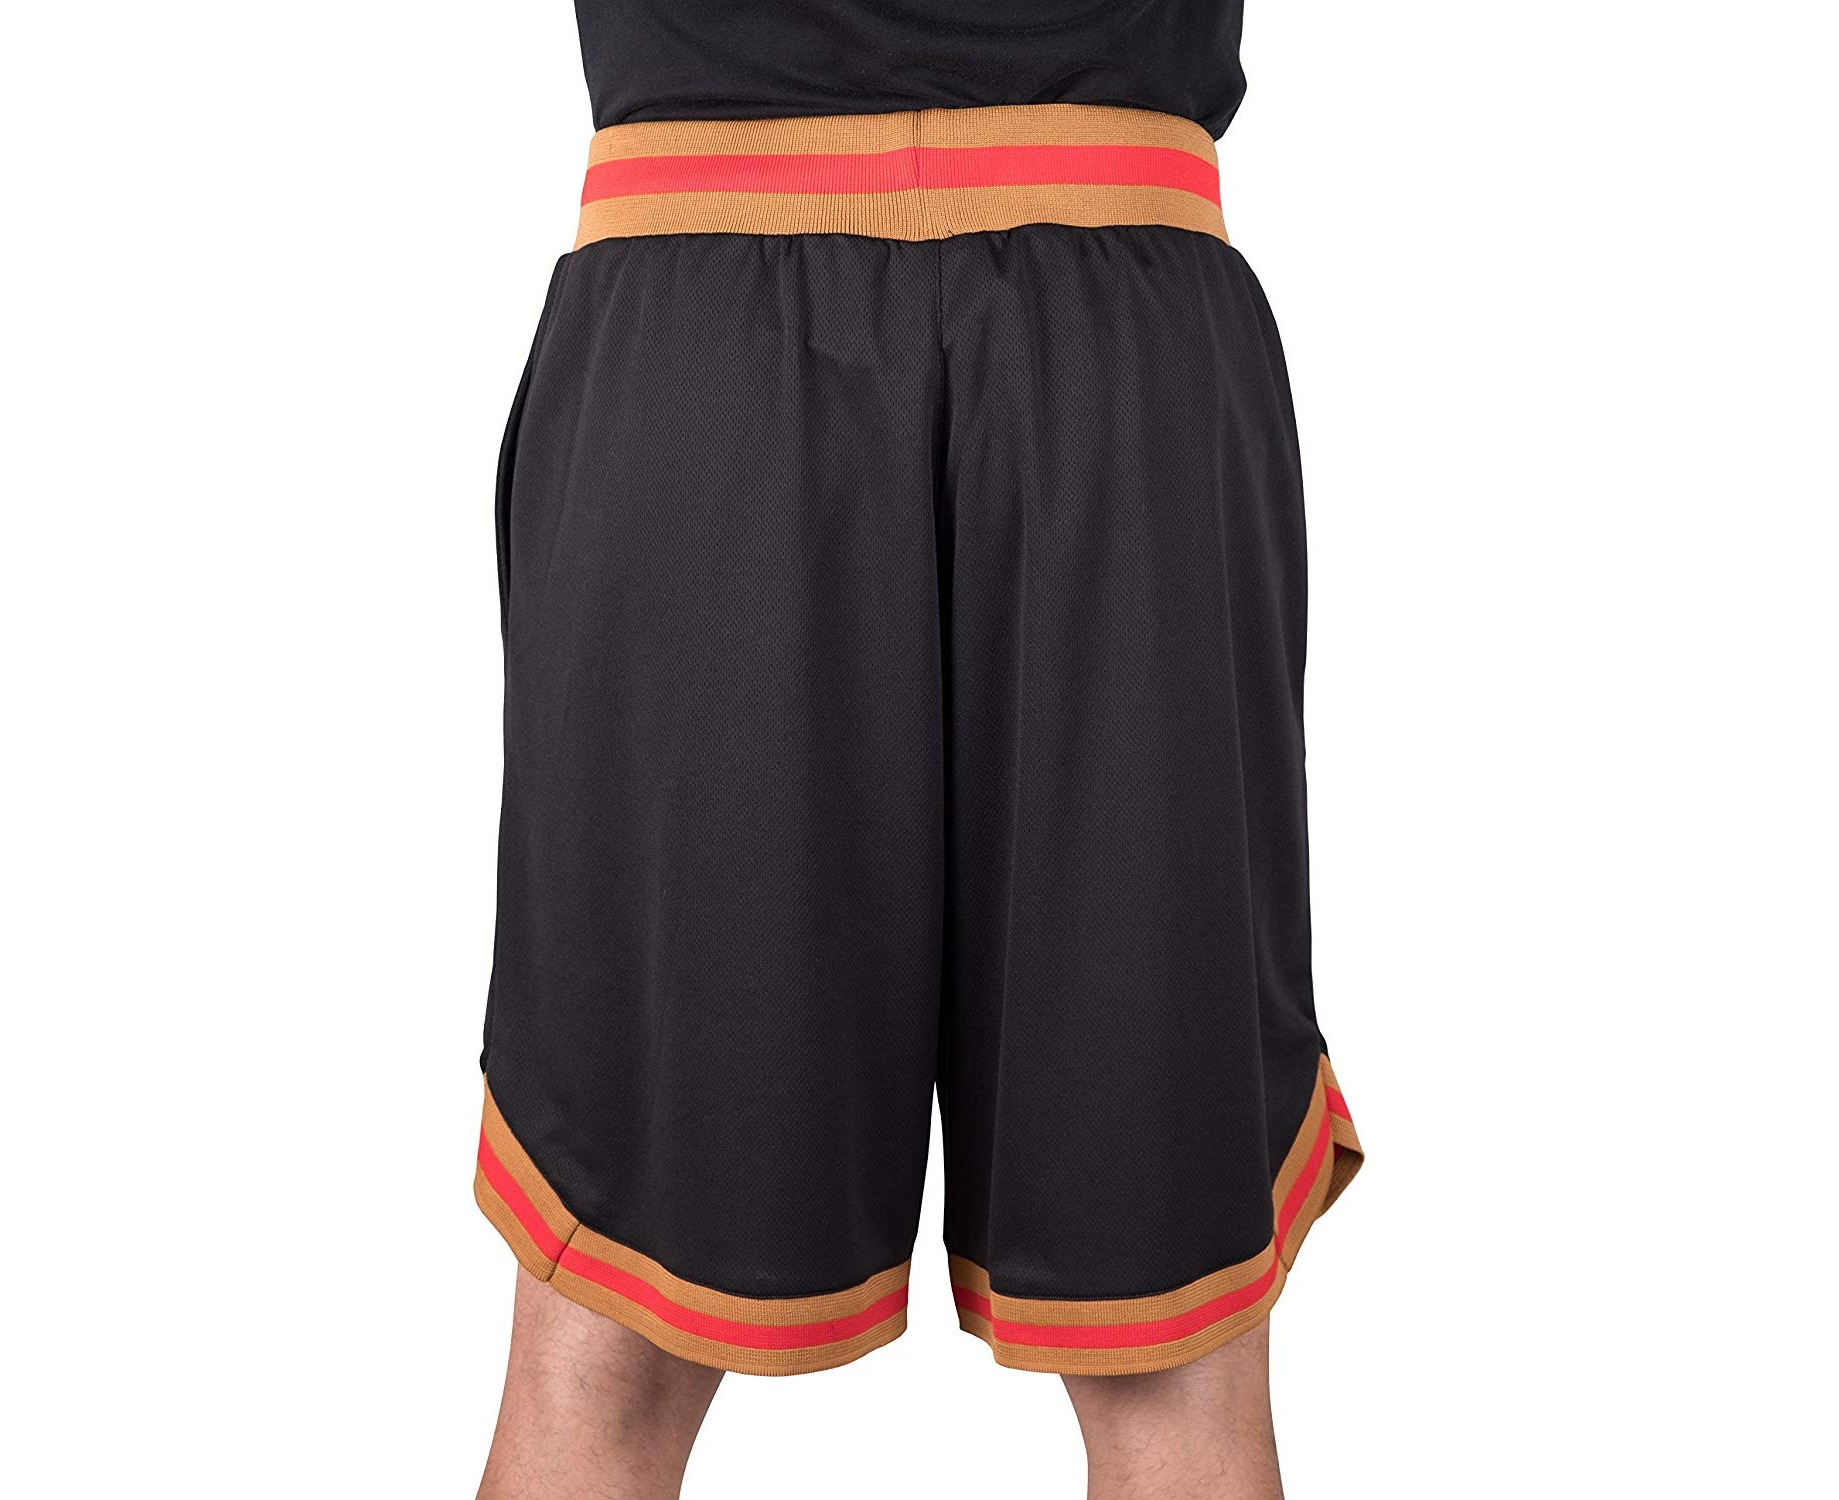 UNK NBA Men's Mesh Basketball Shorts Woven Active Basic, Black